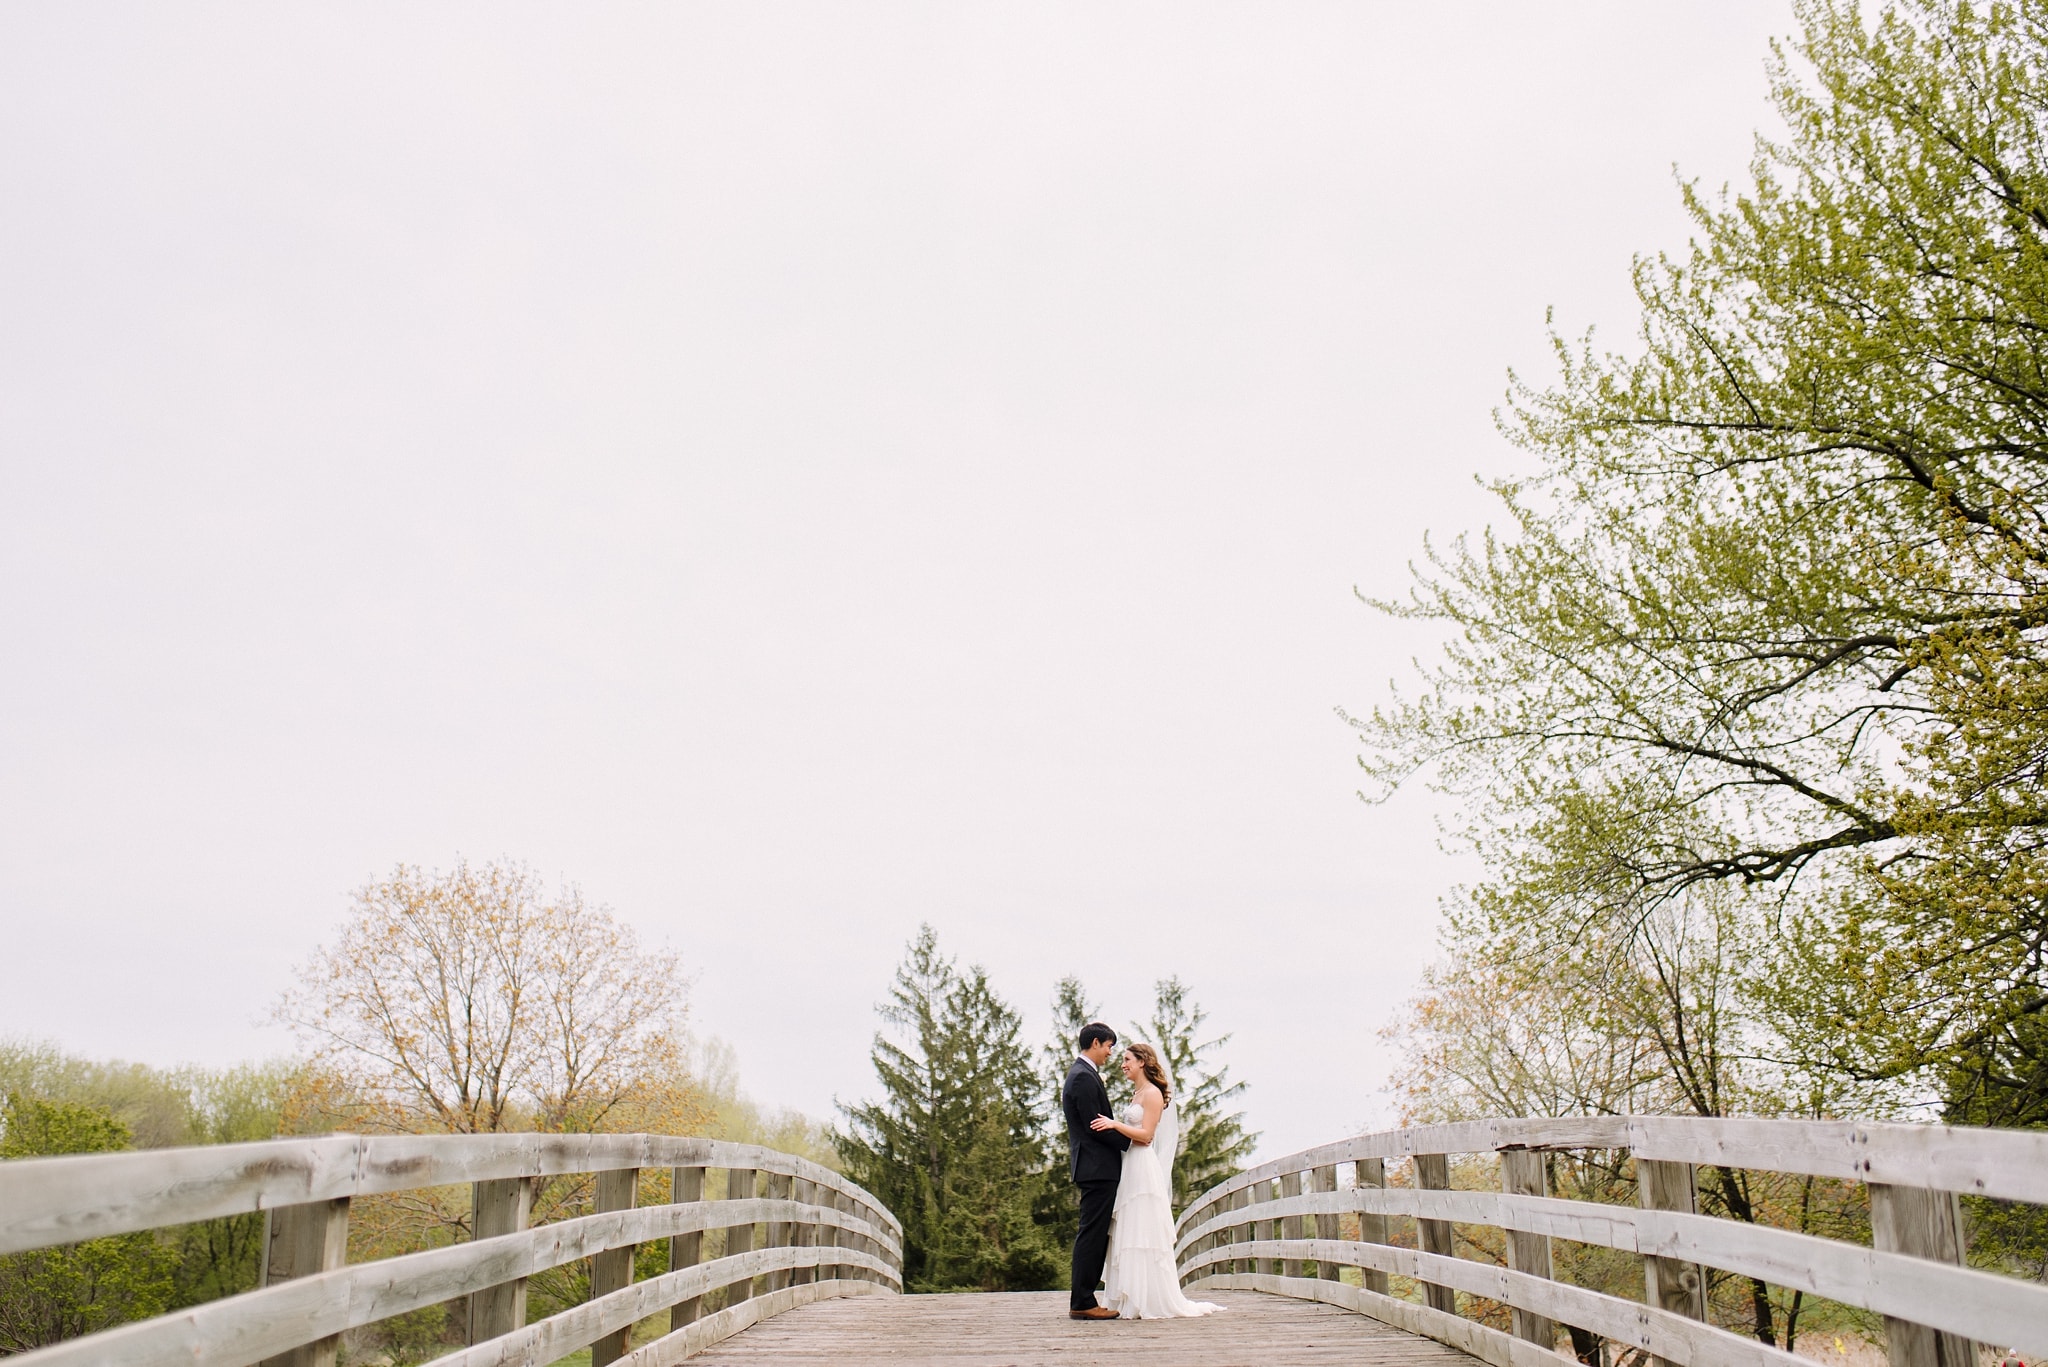 Bride and groom posing on bridge for their Minneapolis wedding photos